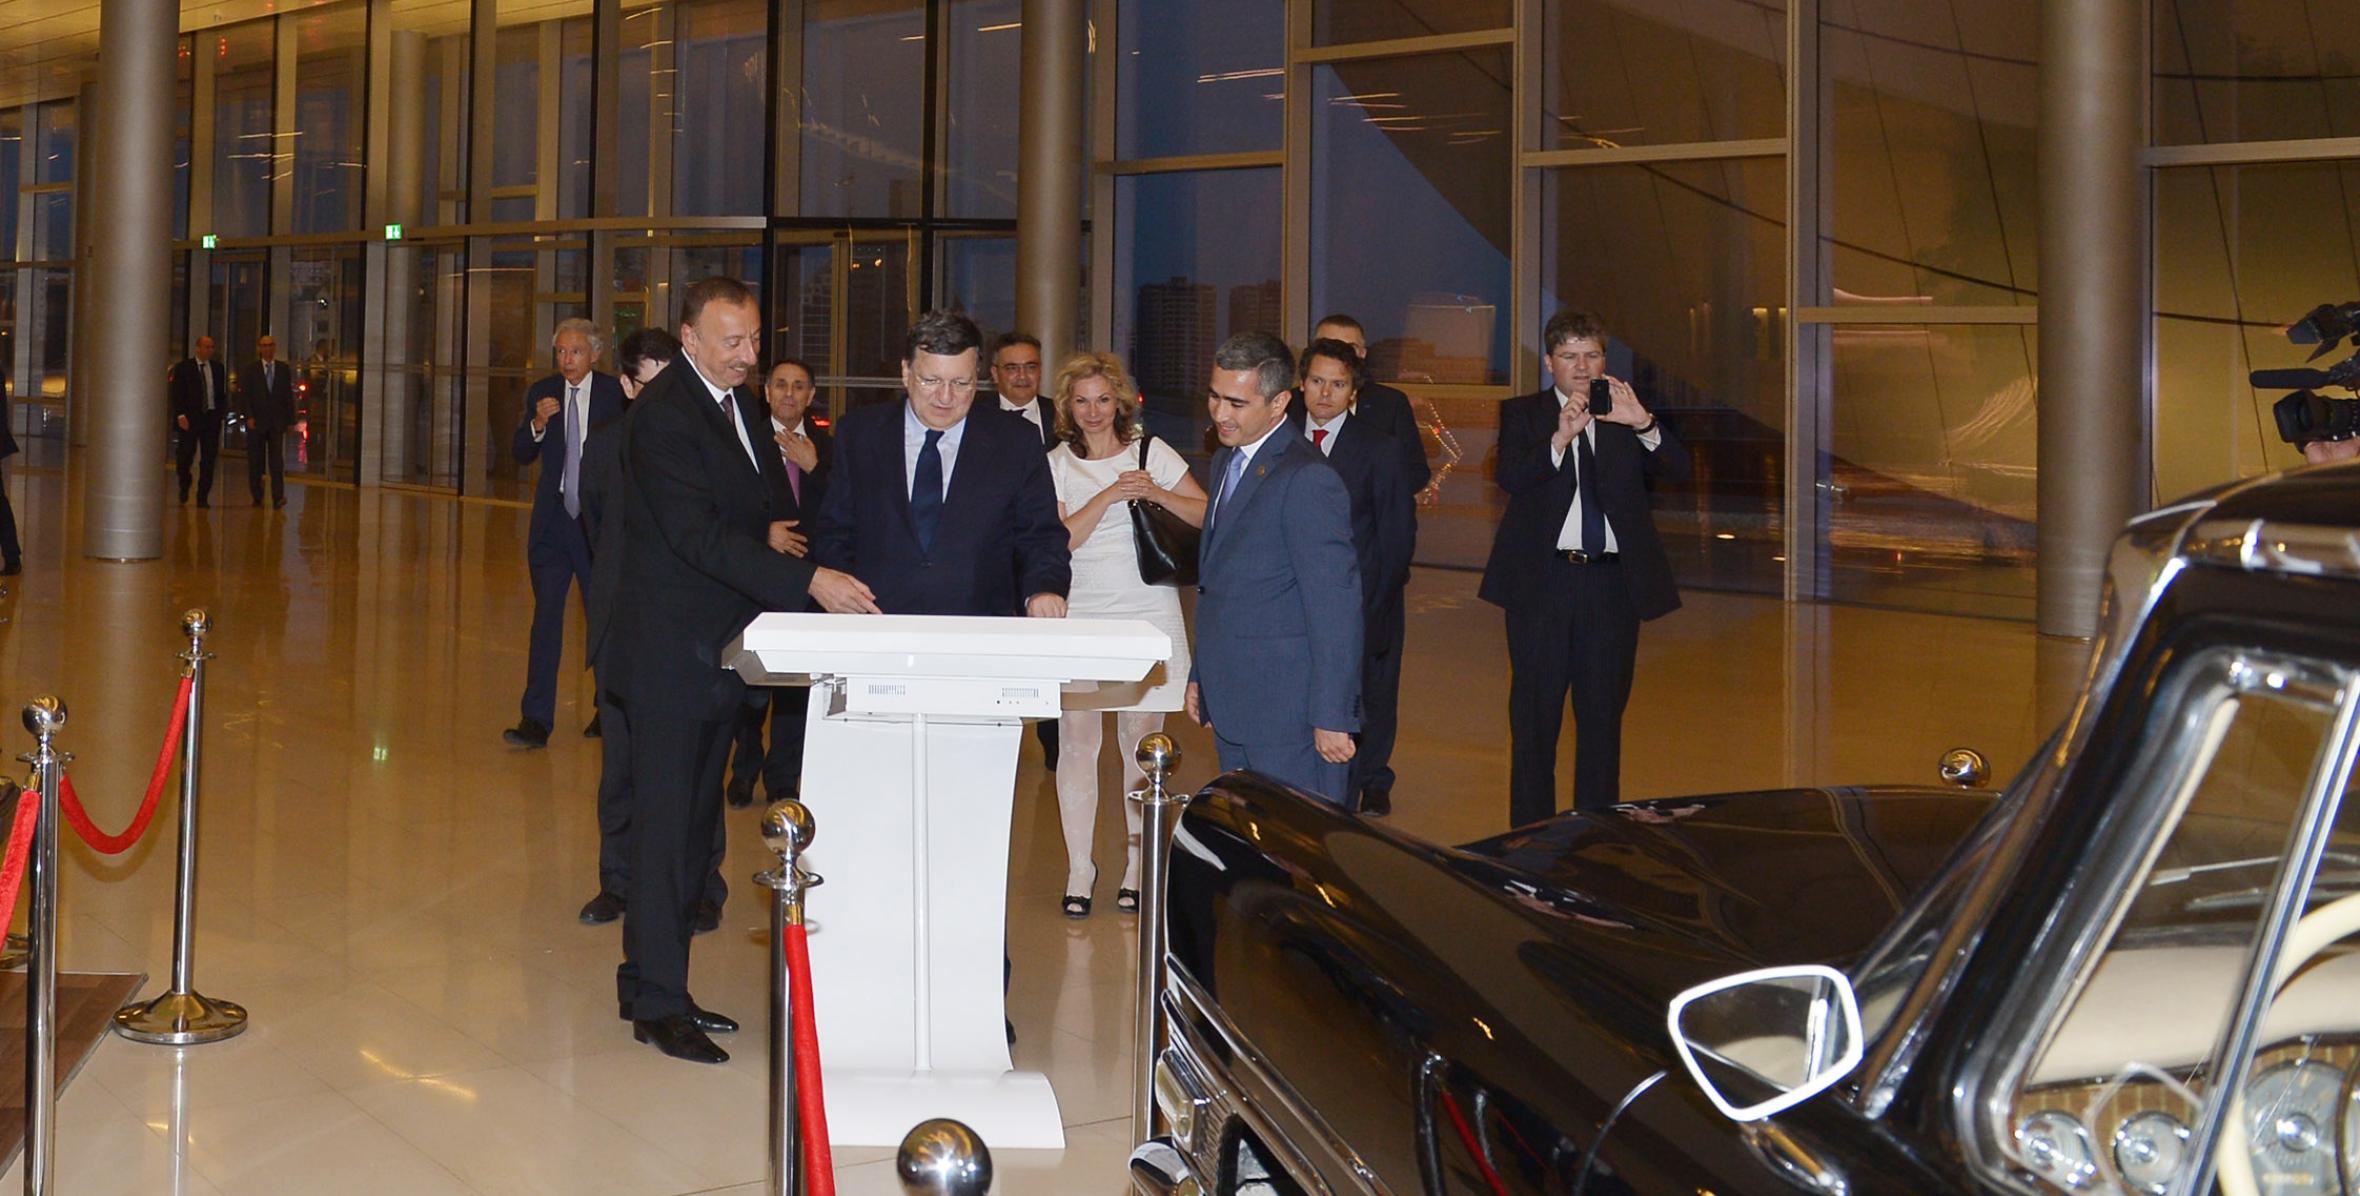 Ilham Aliyev and President of the European Commission Jose Manuel Barroso visited the Heydar Aliyev Center